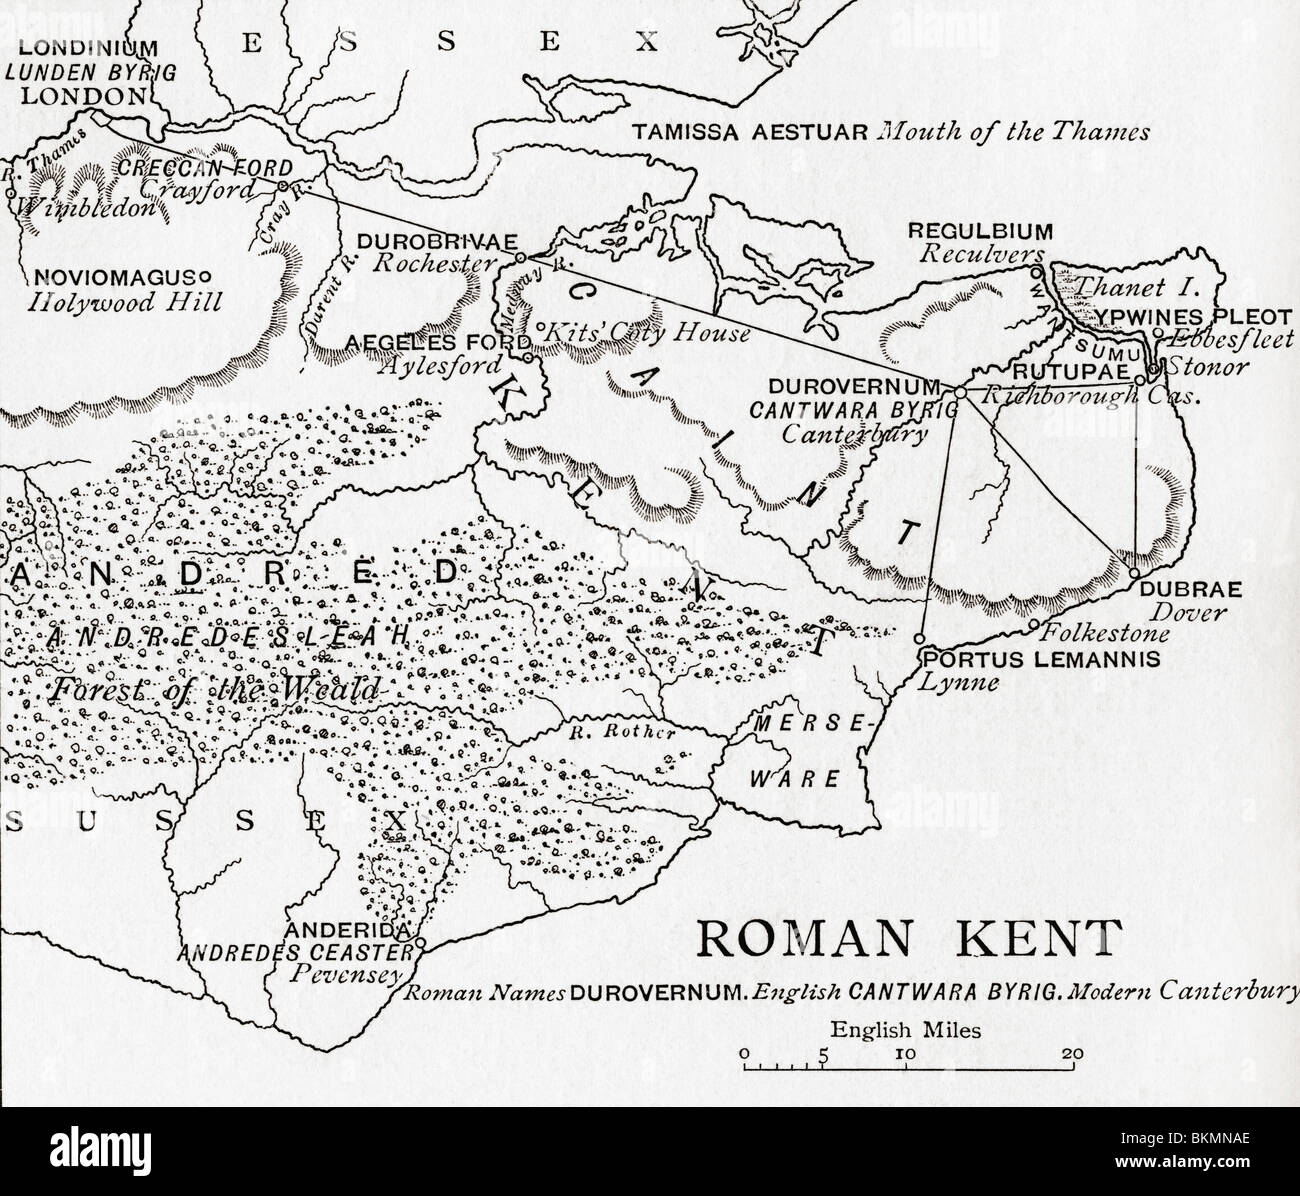 Mapa de Roman Kent, Inglaterra. Foto de stock